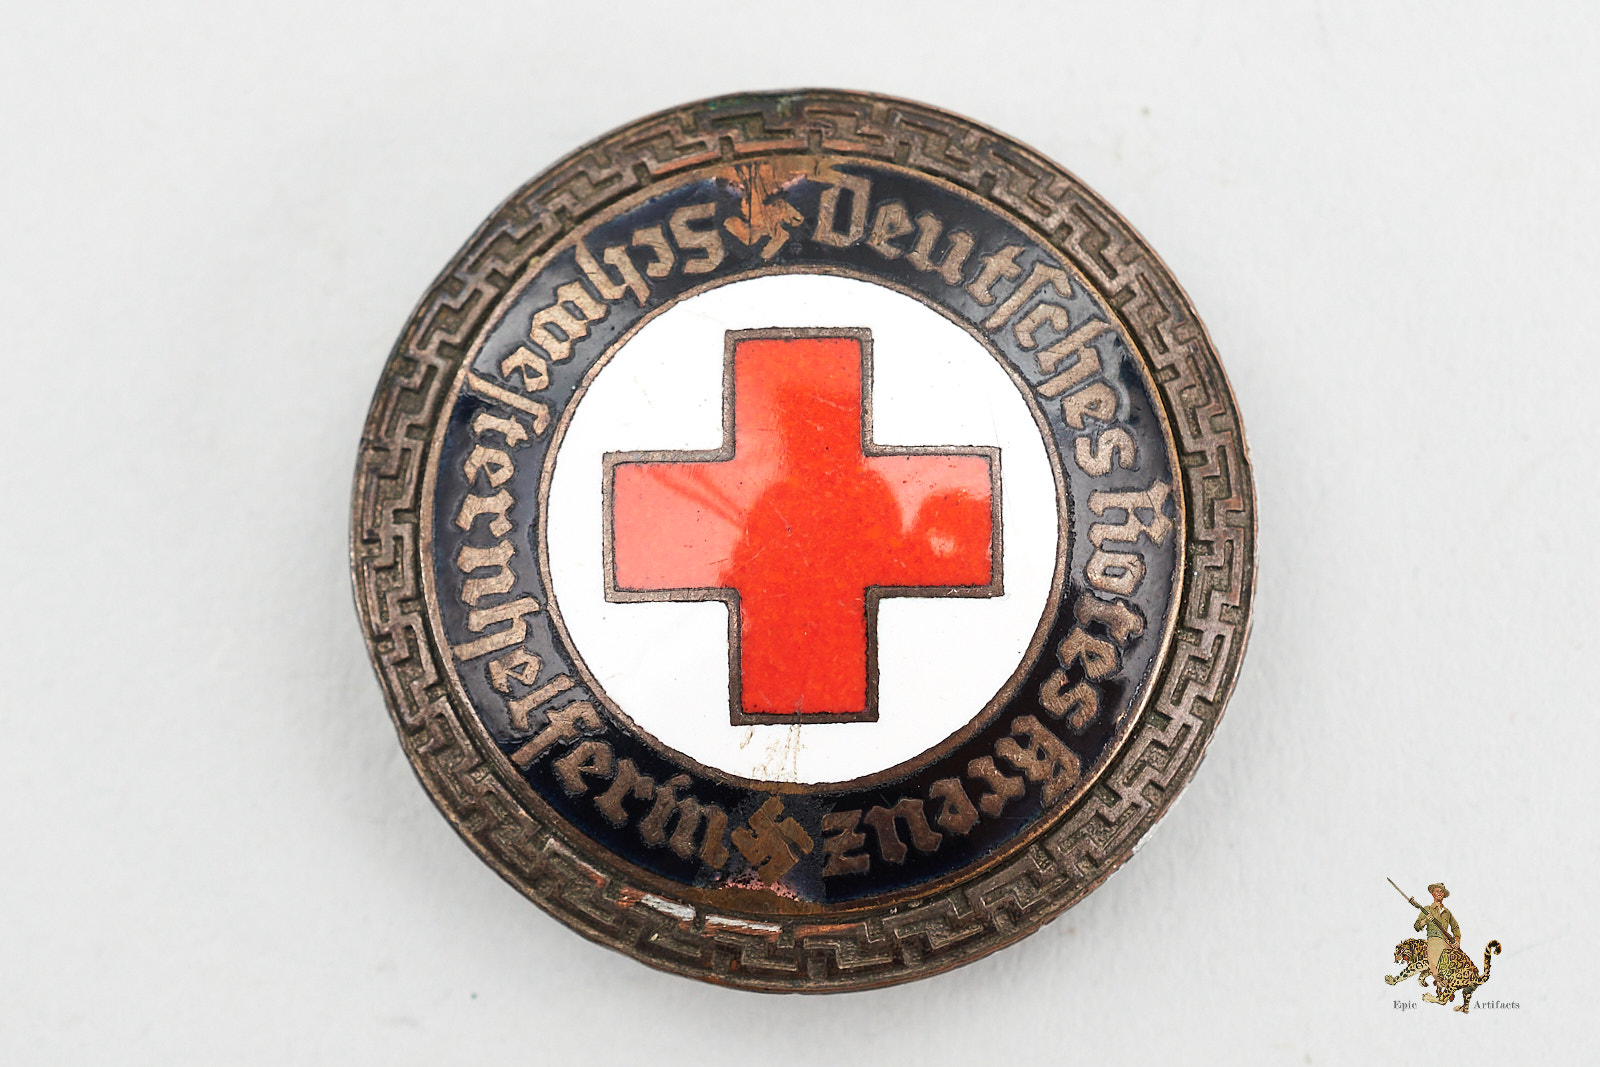 Metropolitan Strengt Langt væk German Red Cross Nurses Aide Badge - Epic Artifacts